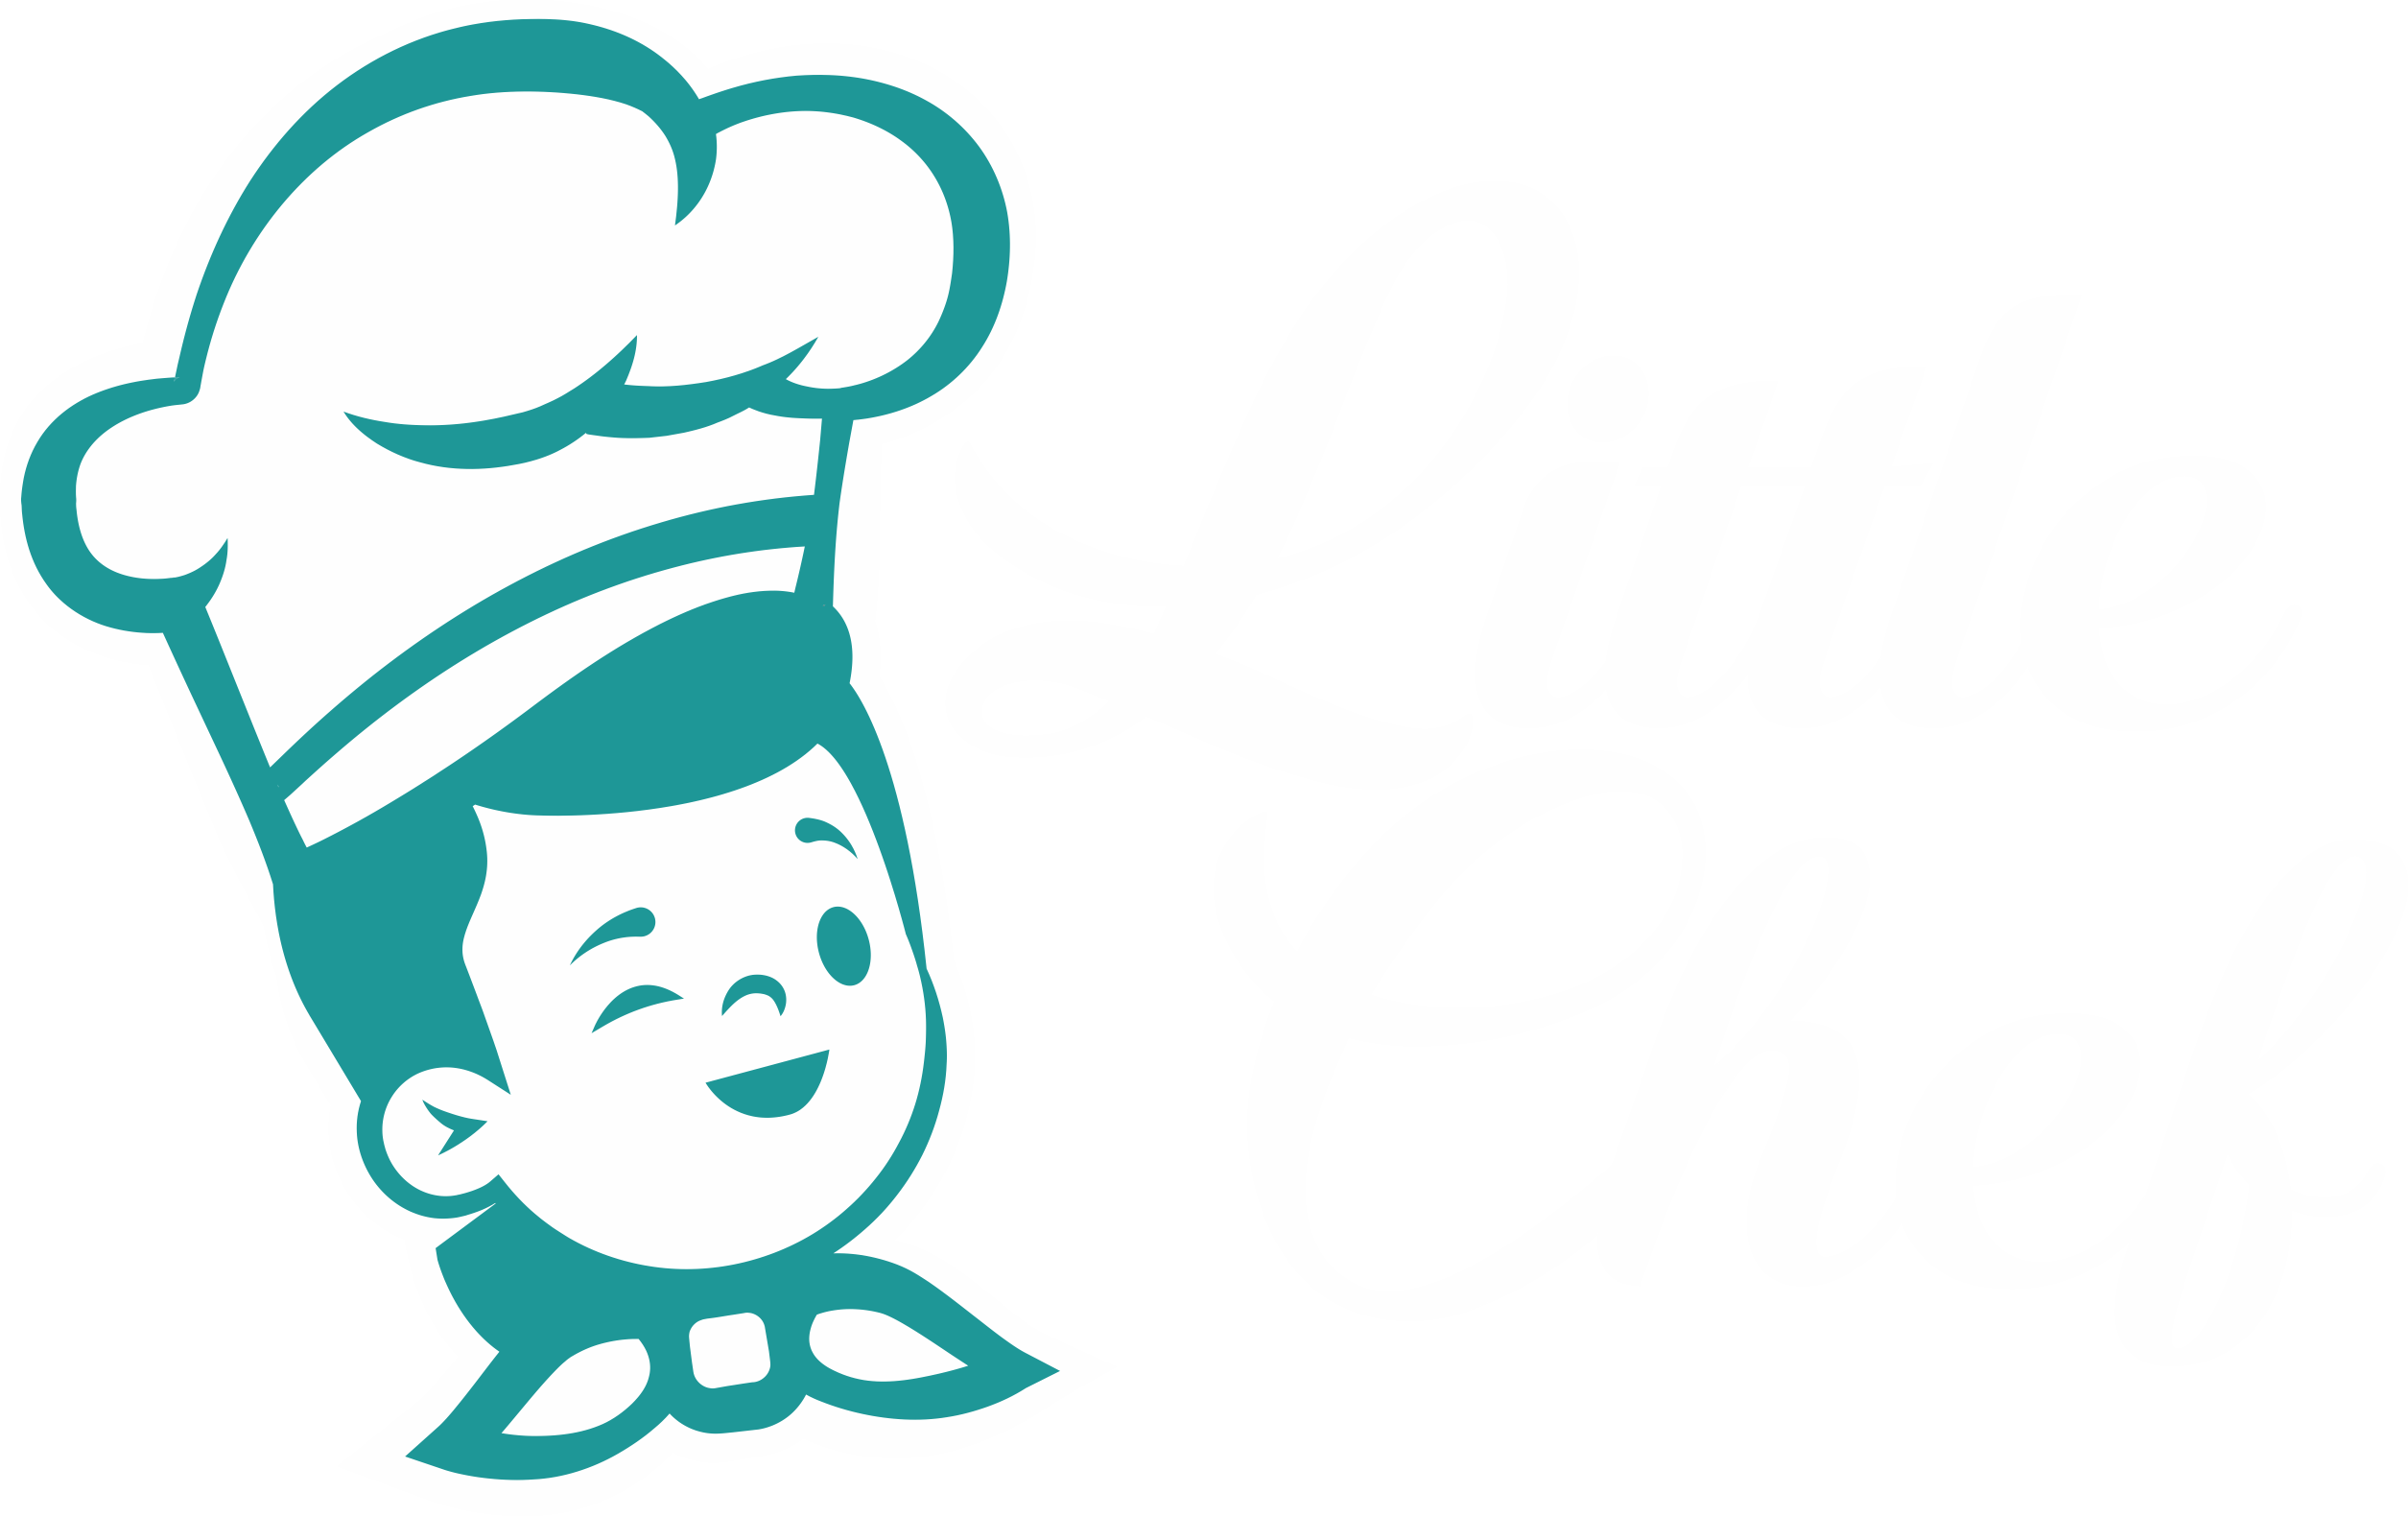 MyFoodCourt - The Little Chef